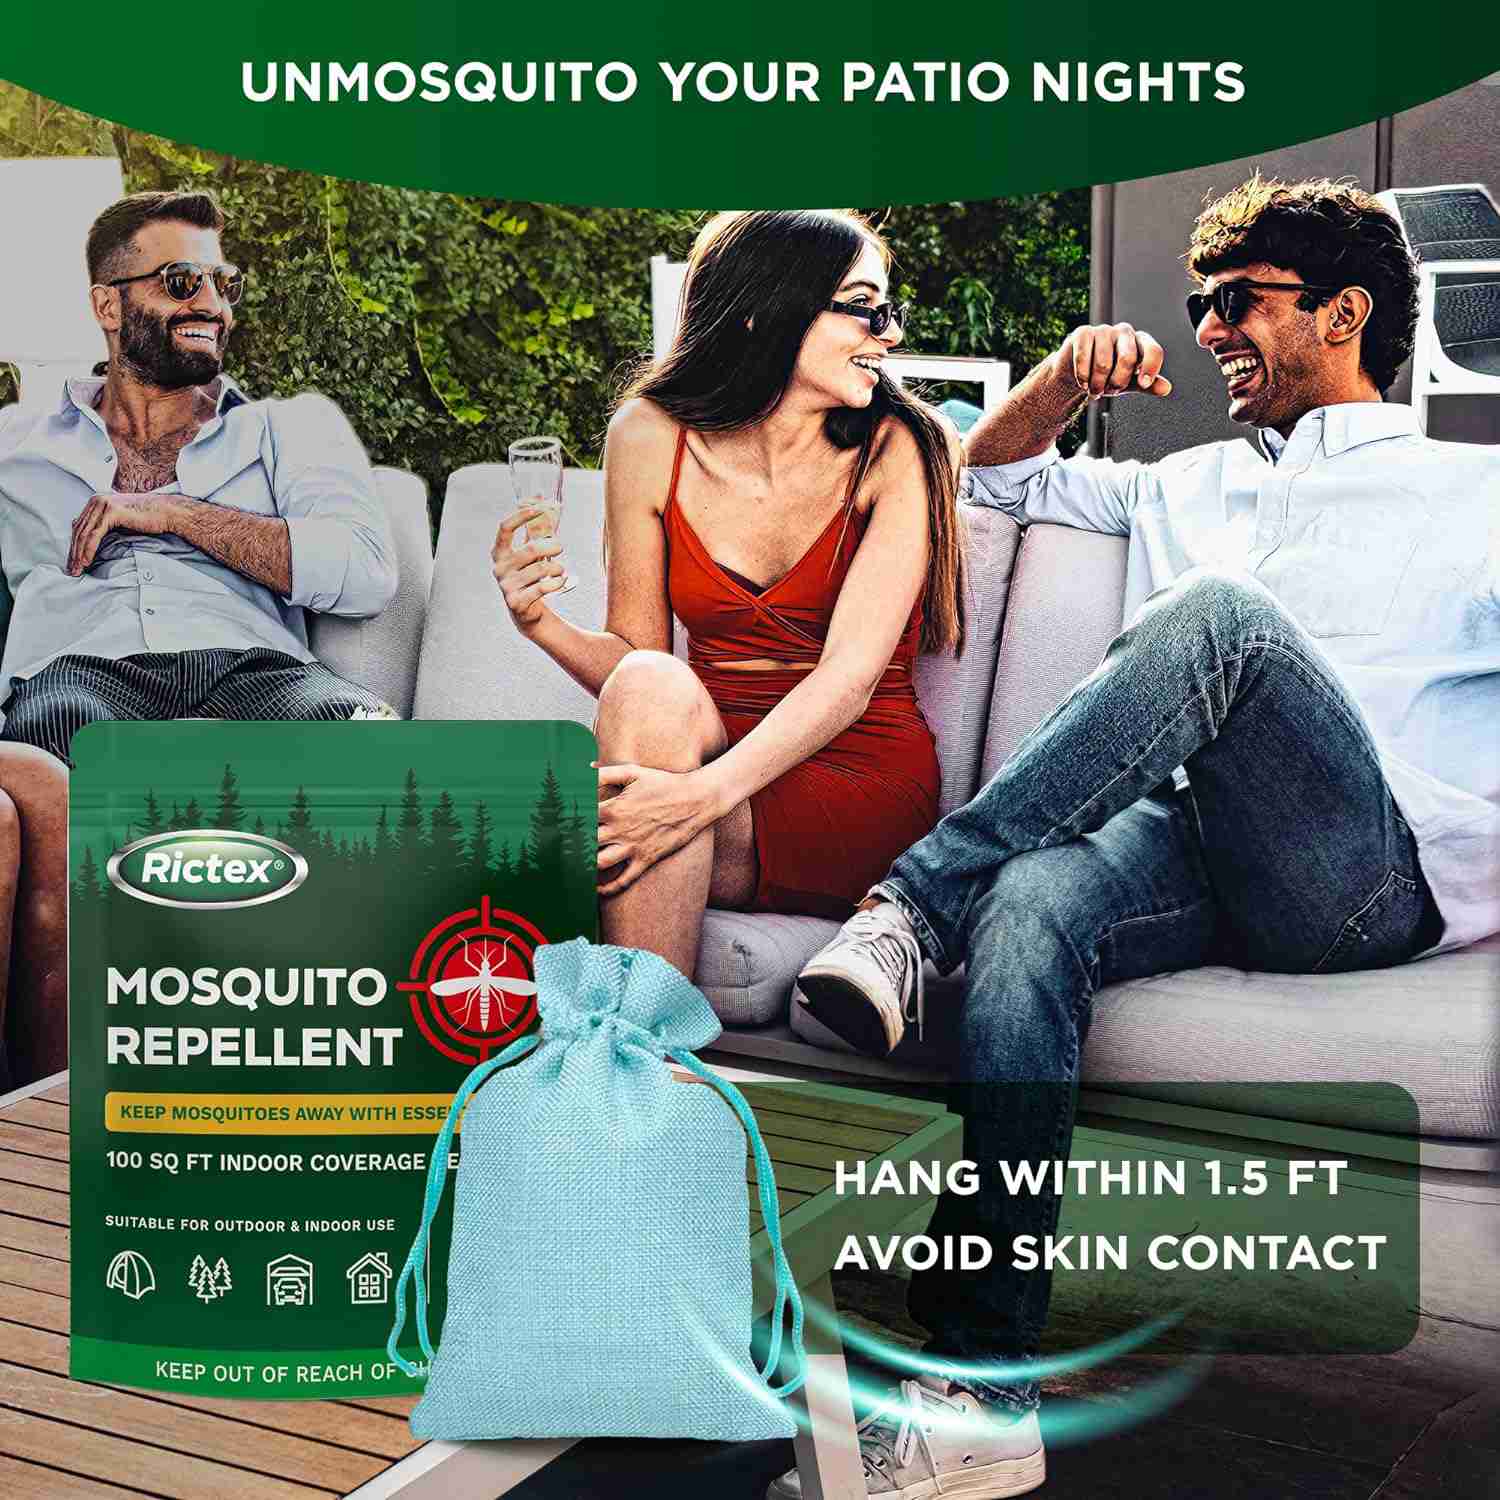 mosquito-repellent-outdoor with discount code